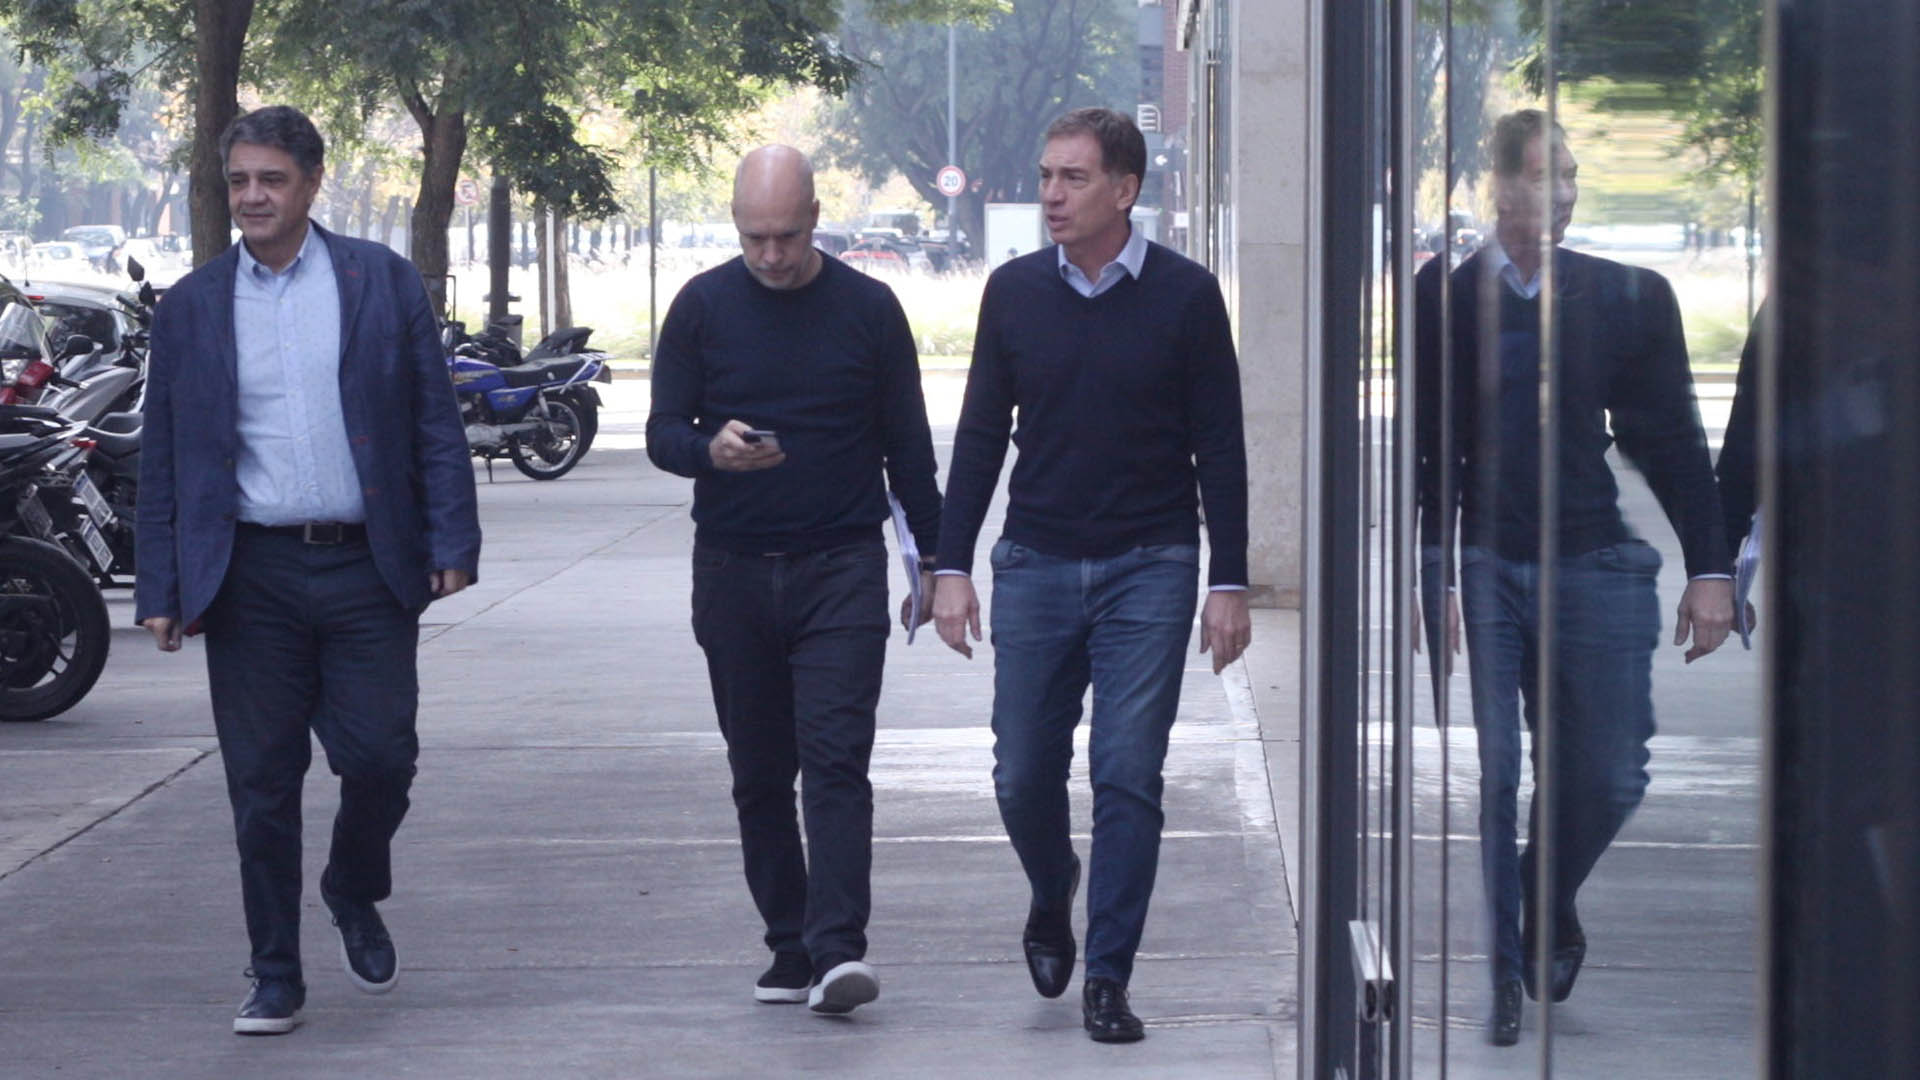 Jorge Macri, Horacio Rodríguez Larreta and Diego Santilli arrive at the PRO lunch